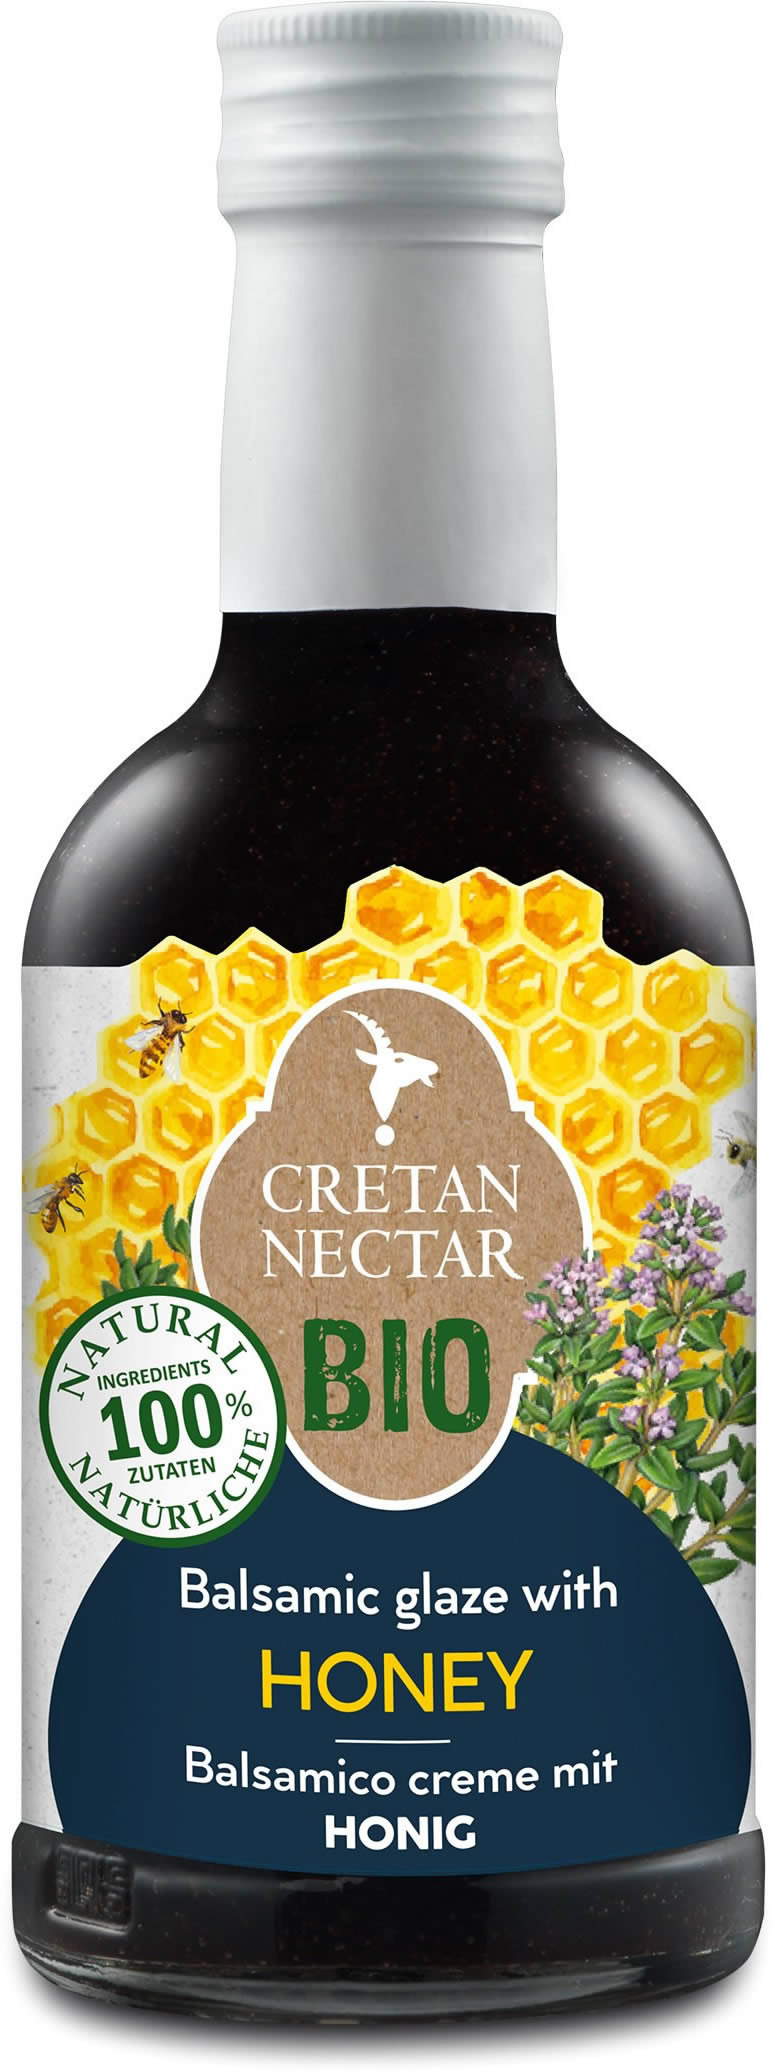 Cretan Nectar - Balsamico Creme mit Honig BIO 250 ml